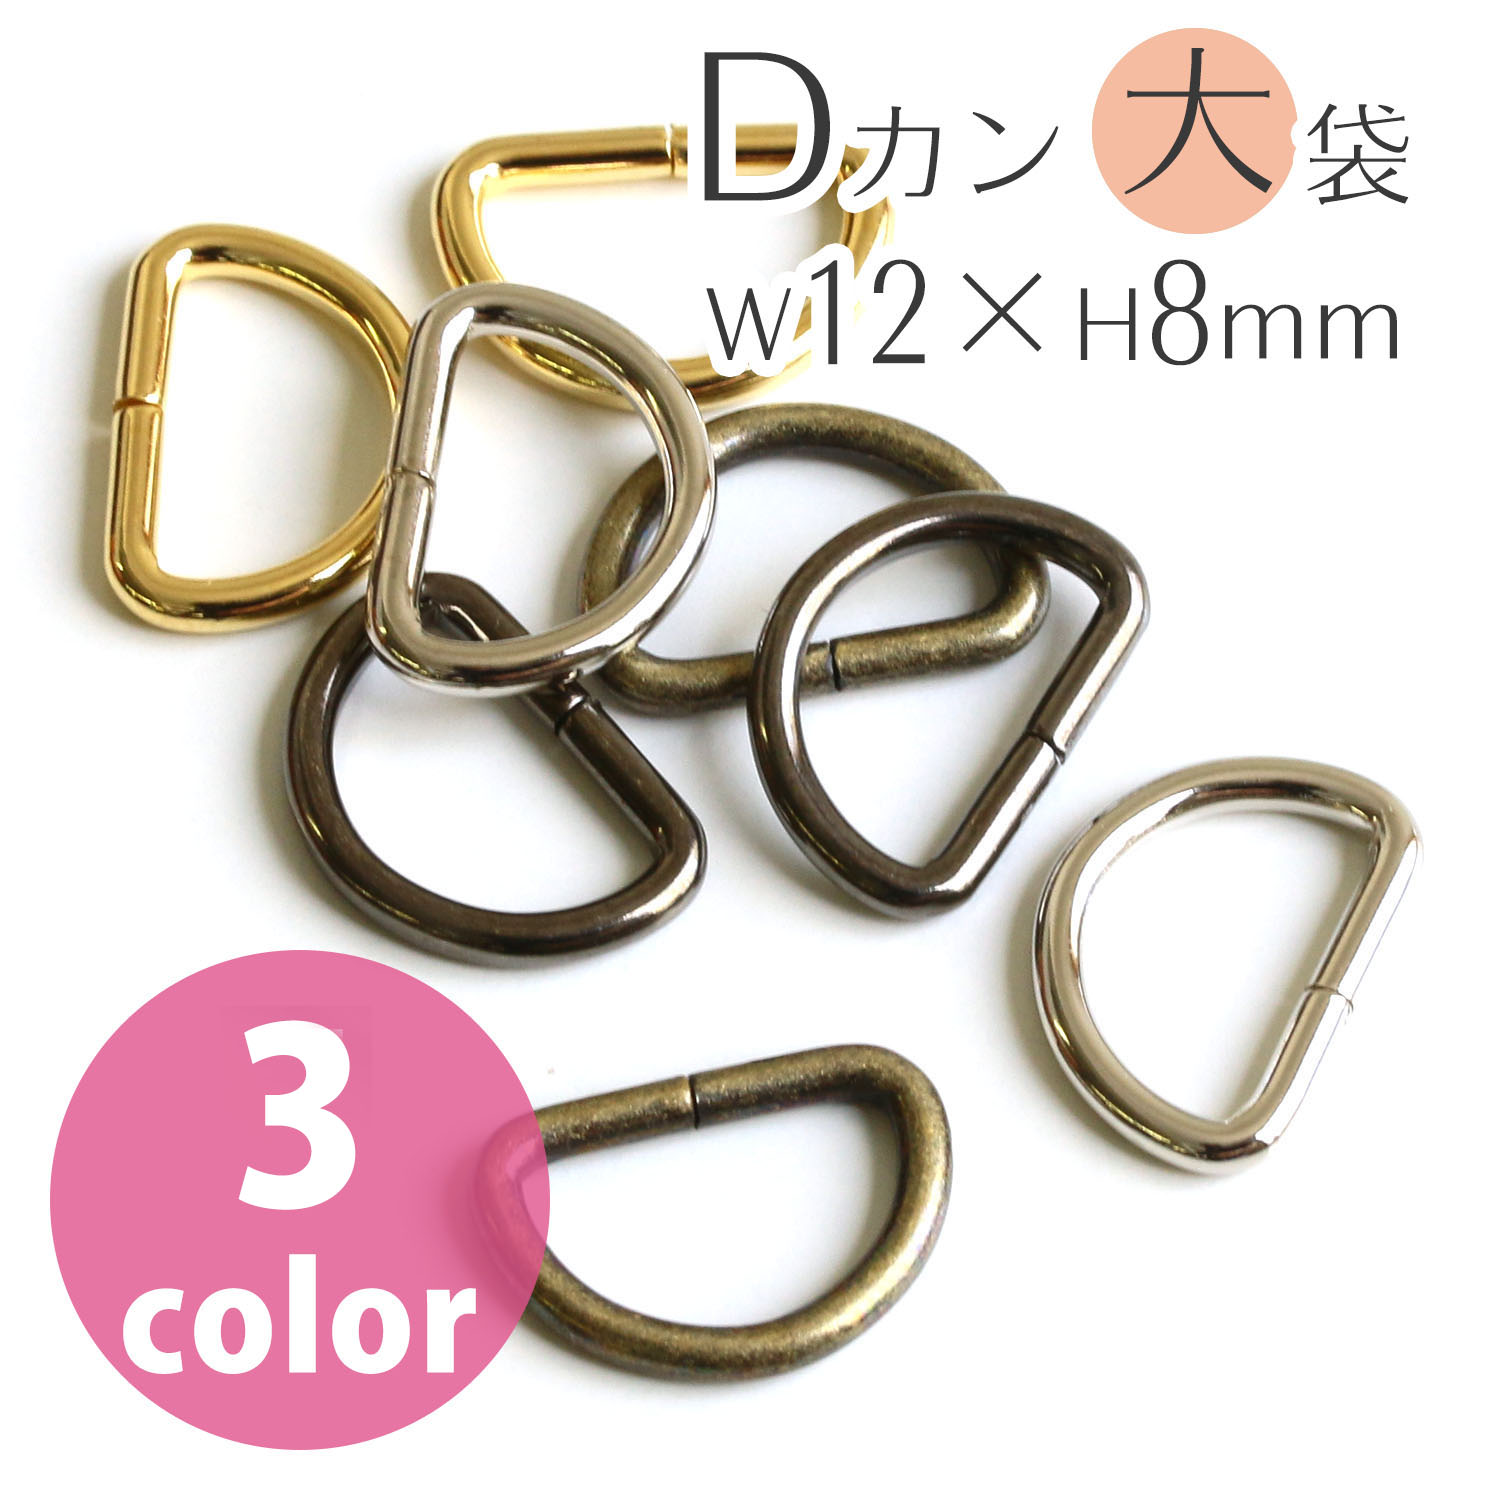 S22 D-Ring  12 x 8mm"", diameter 2mm 120pcs  (bag)